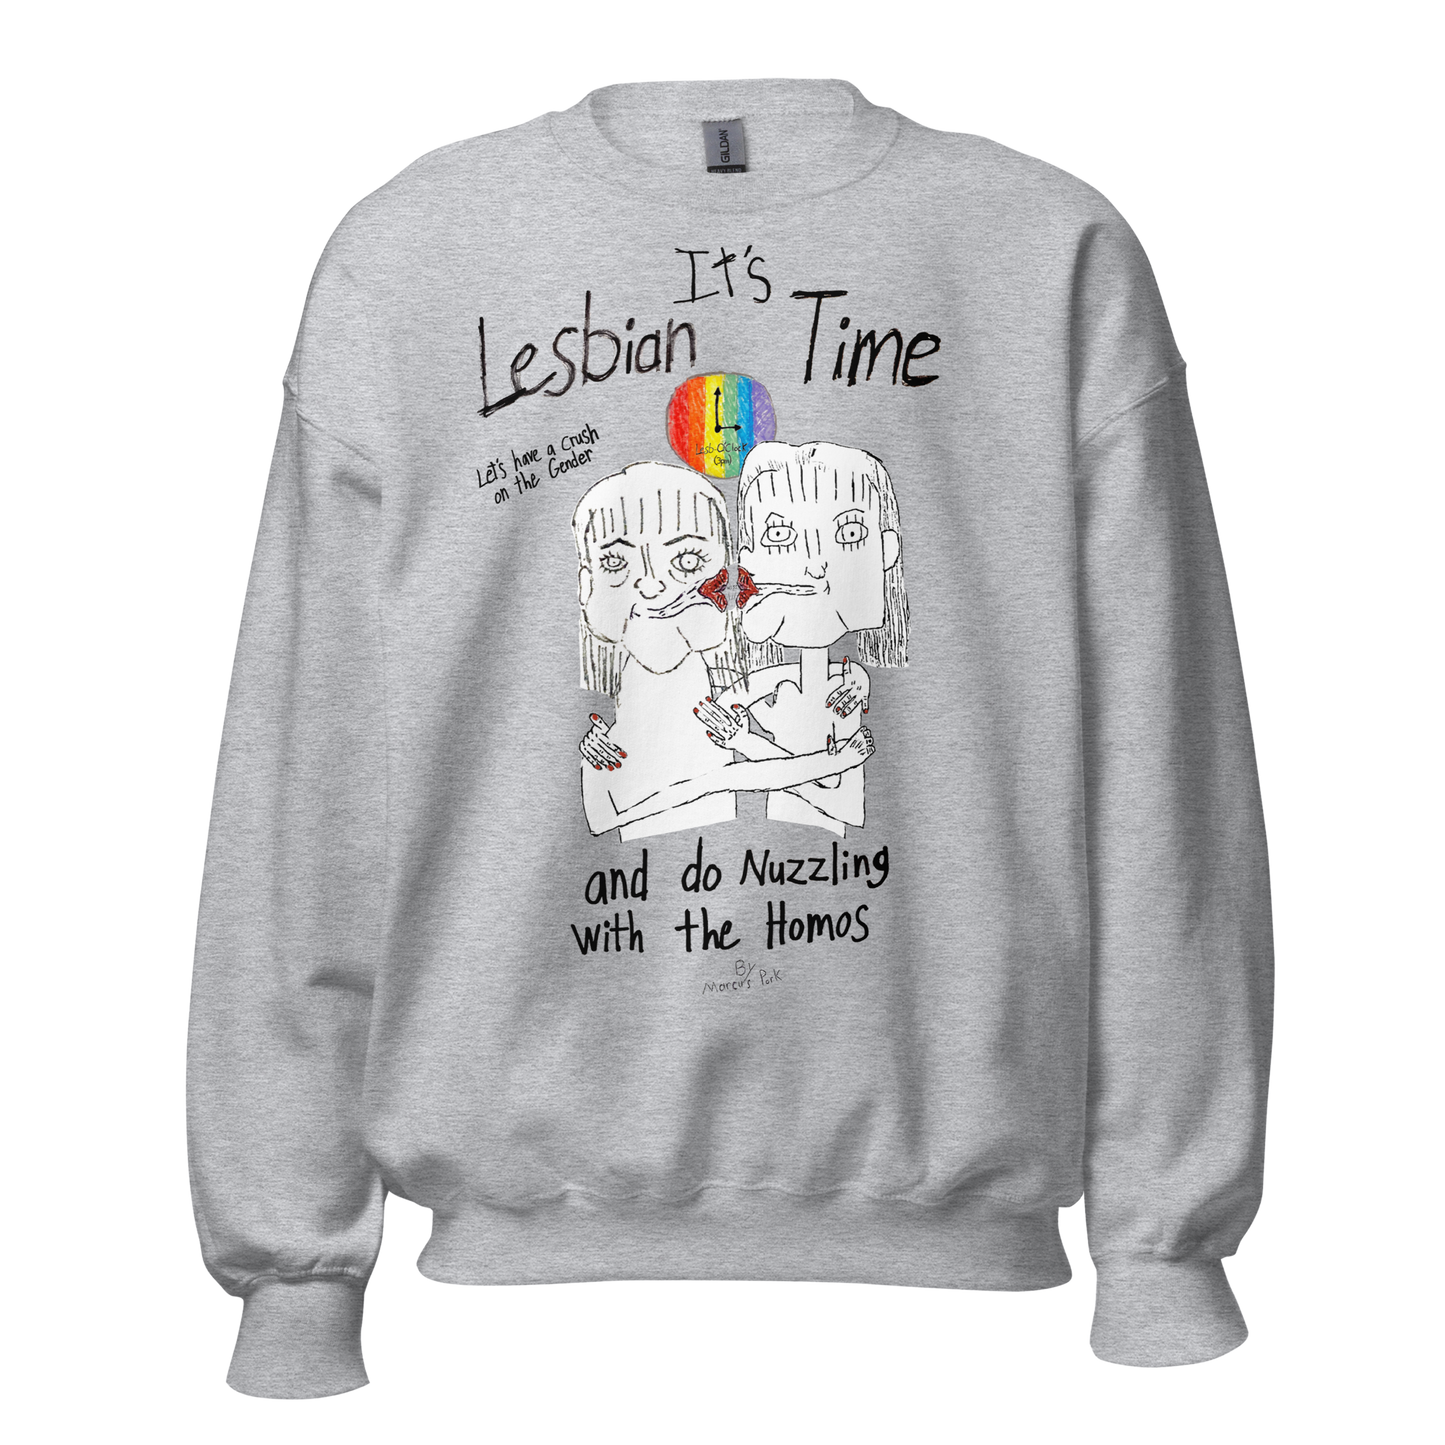 Lesbian Time Sweatshirt